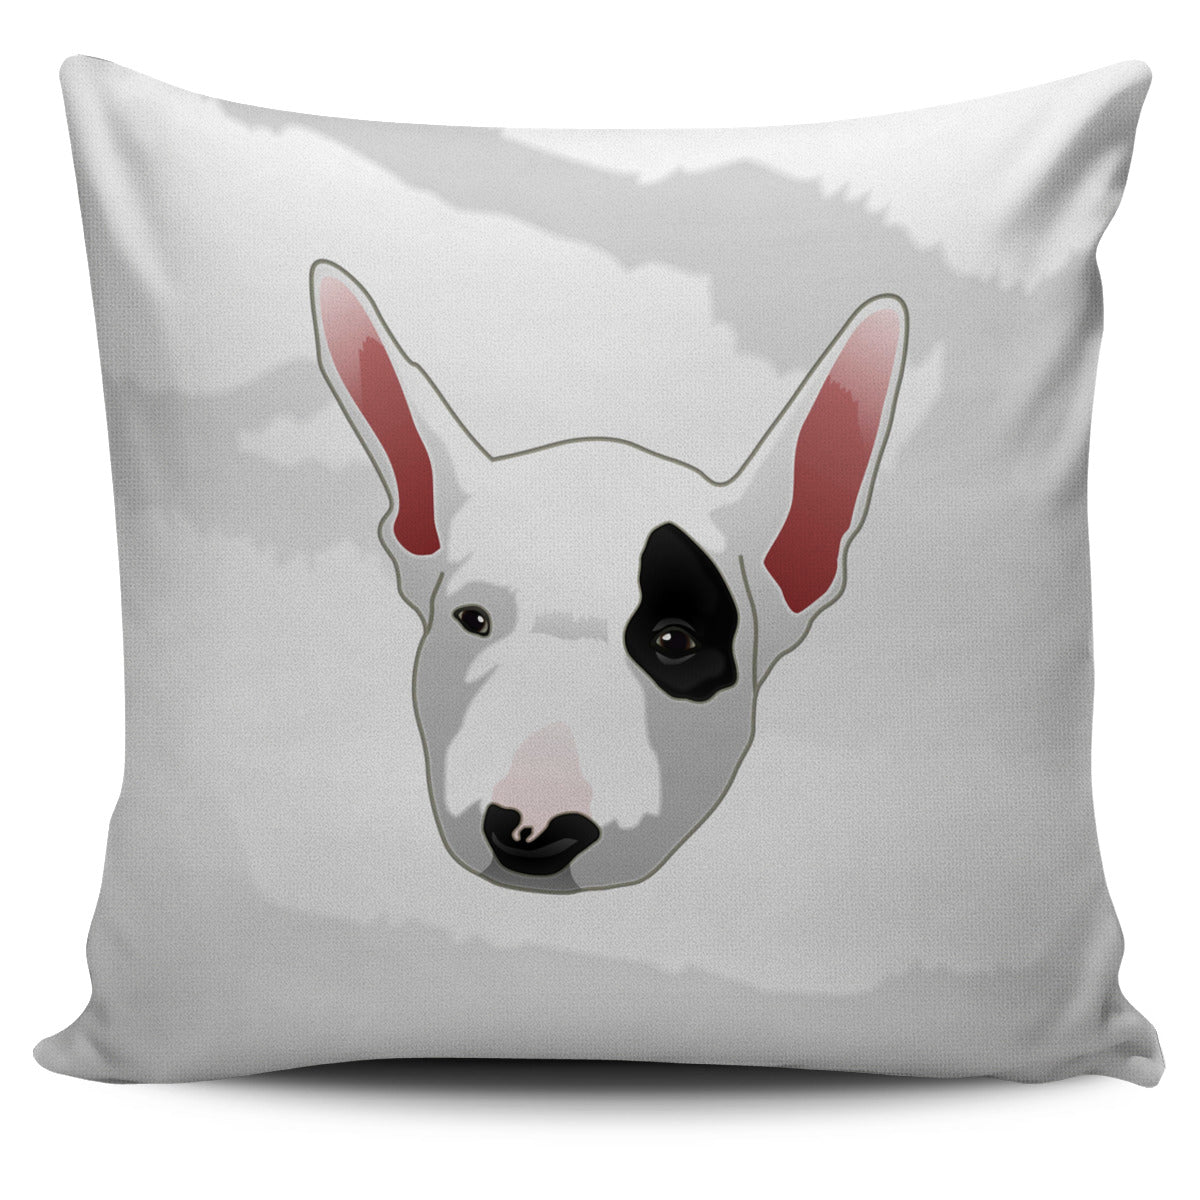 Real Bull Terrier Pillow Cover